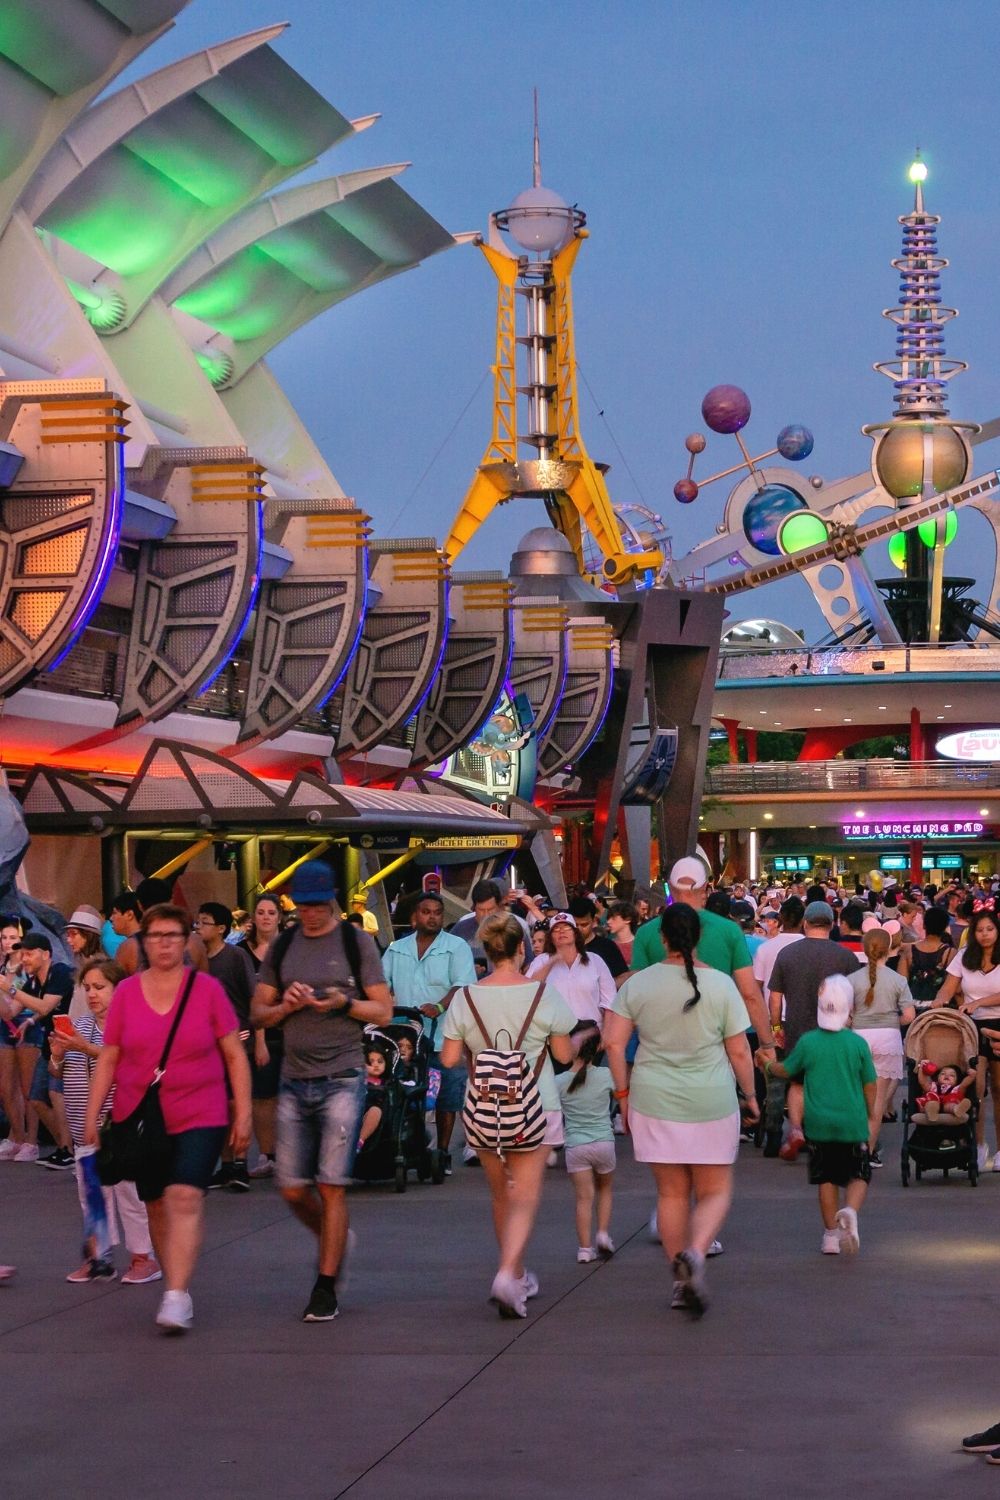 Guests walking in Tomorrowland at Disney's Magic Kingdom theme park